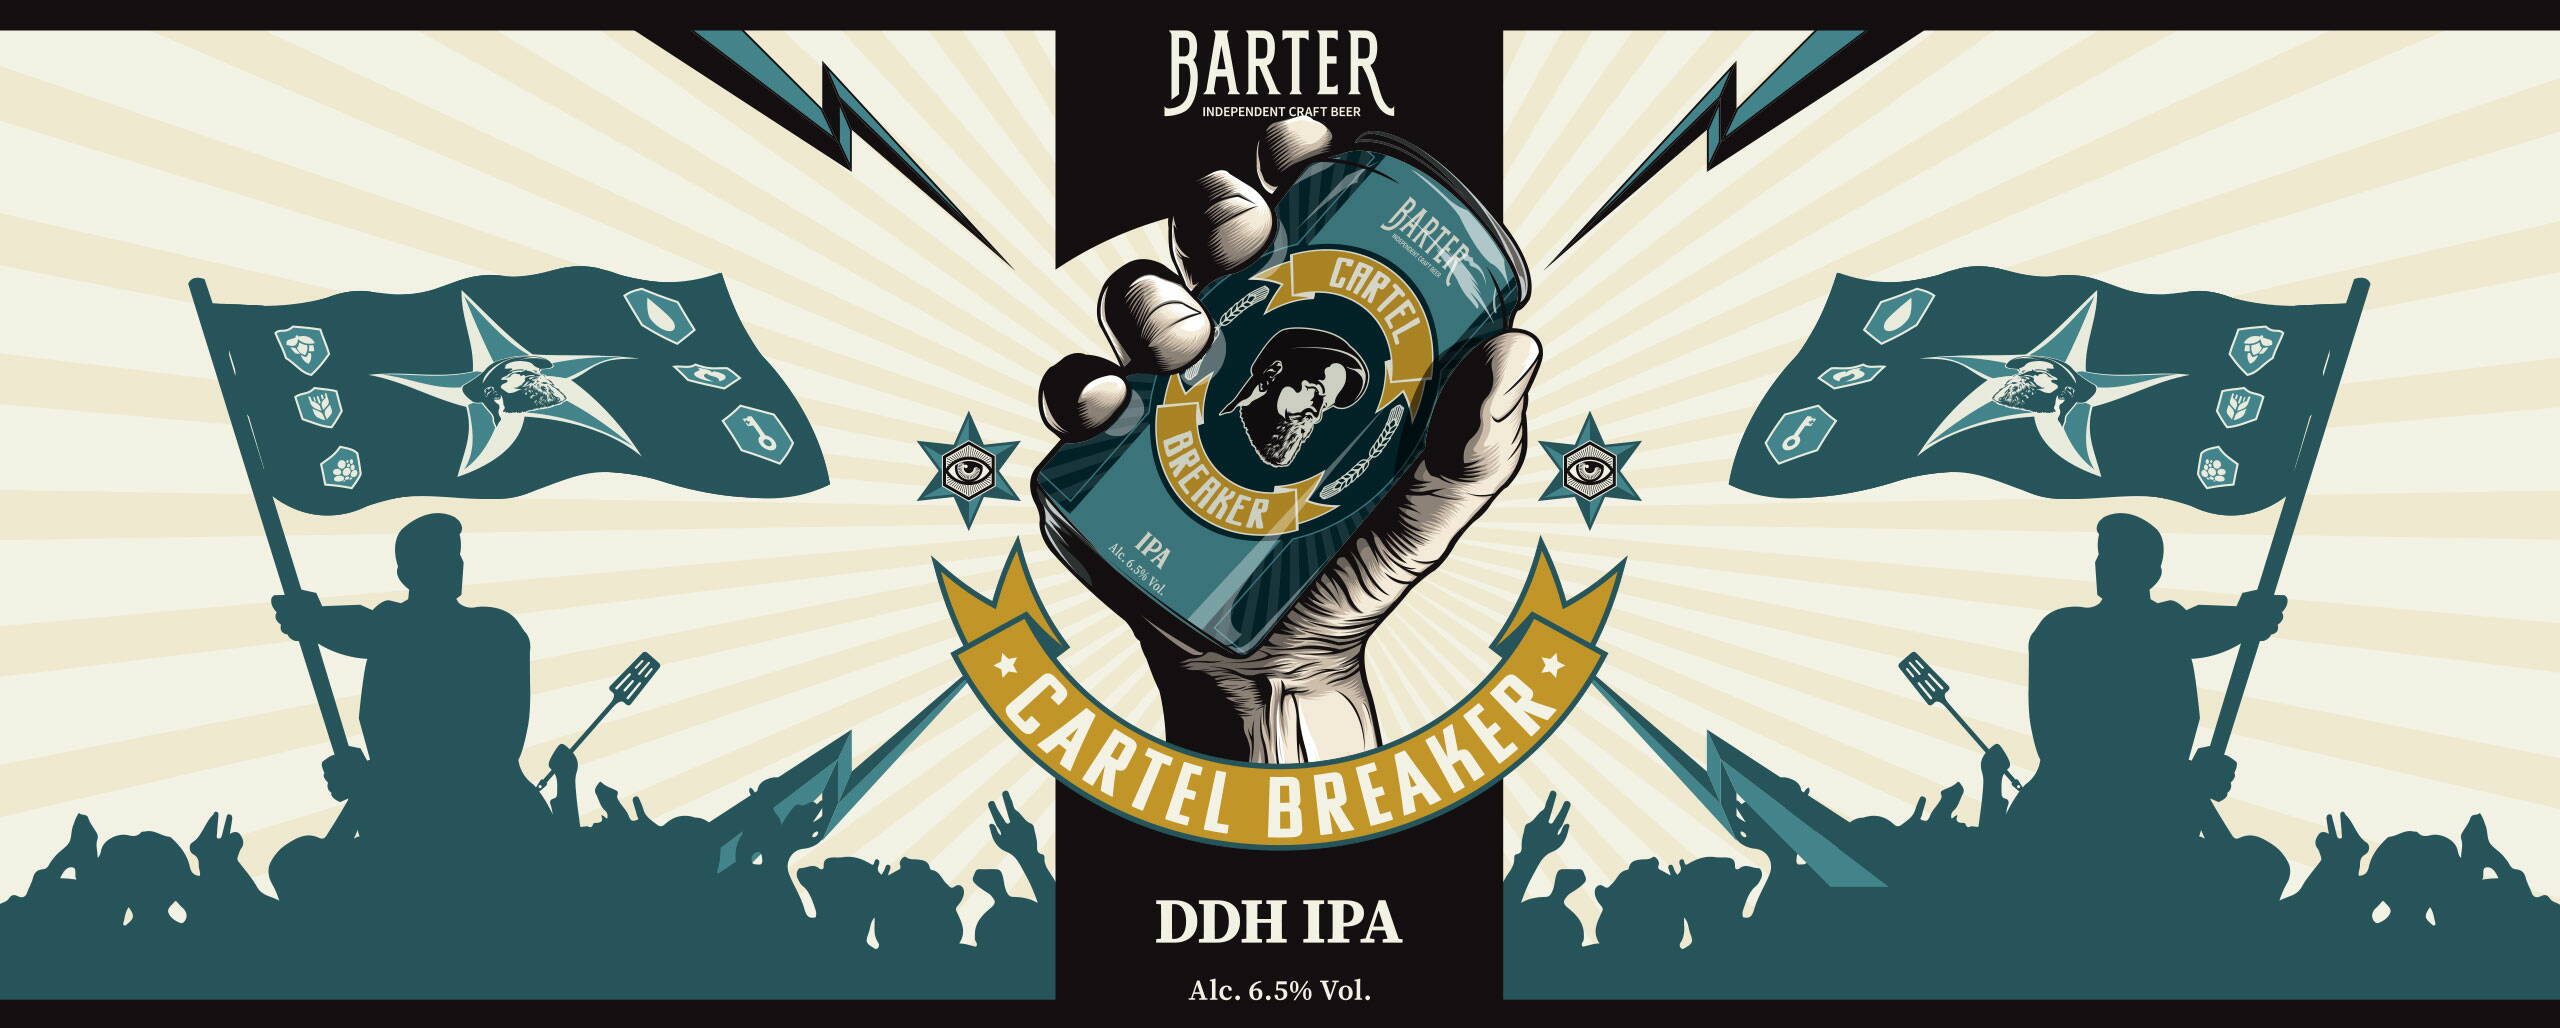 Cartel Breaker – Barter Independent Craft Beer